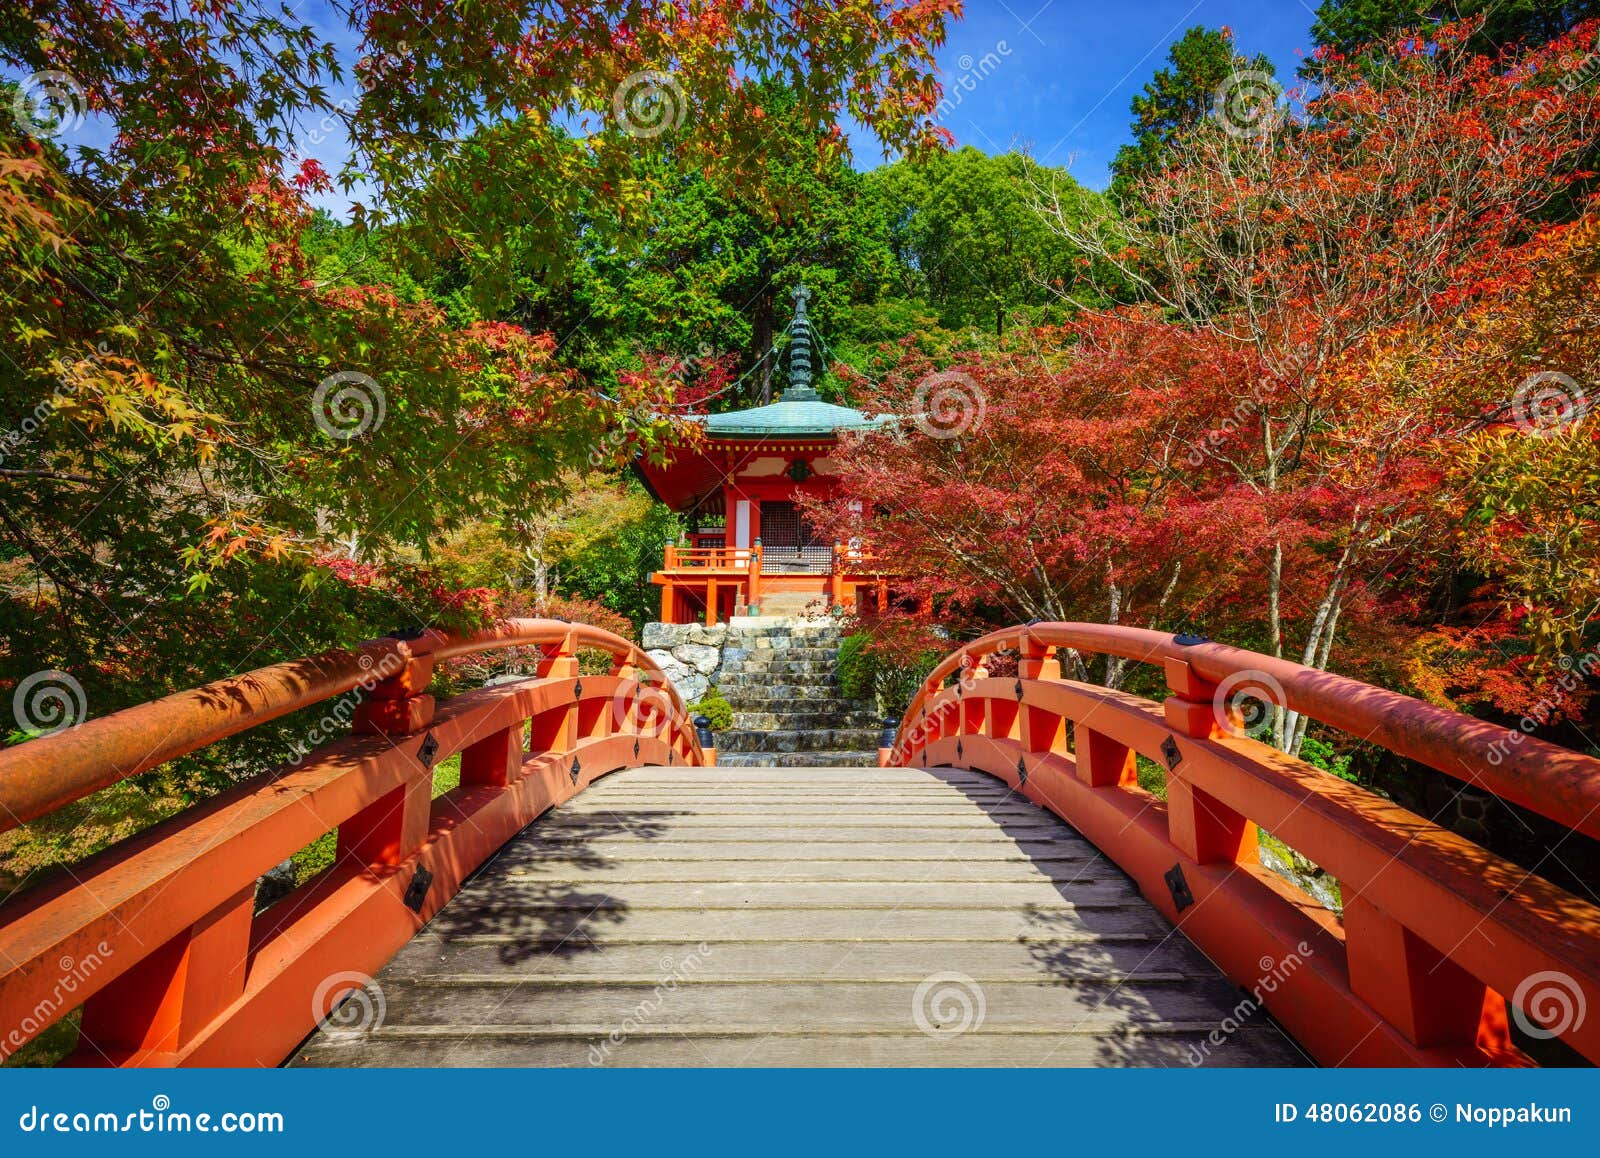 daigoji temple in autumn, kyoto, japan